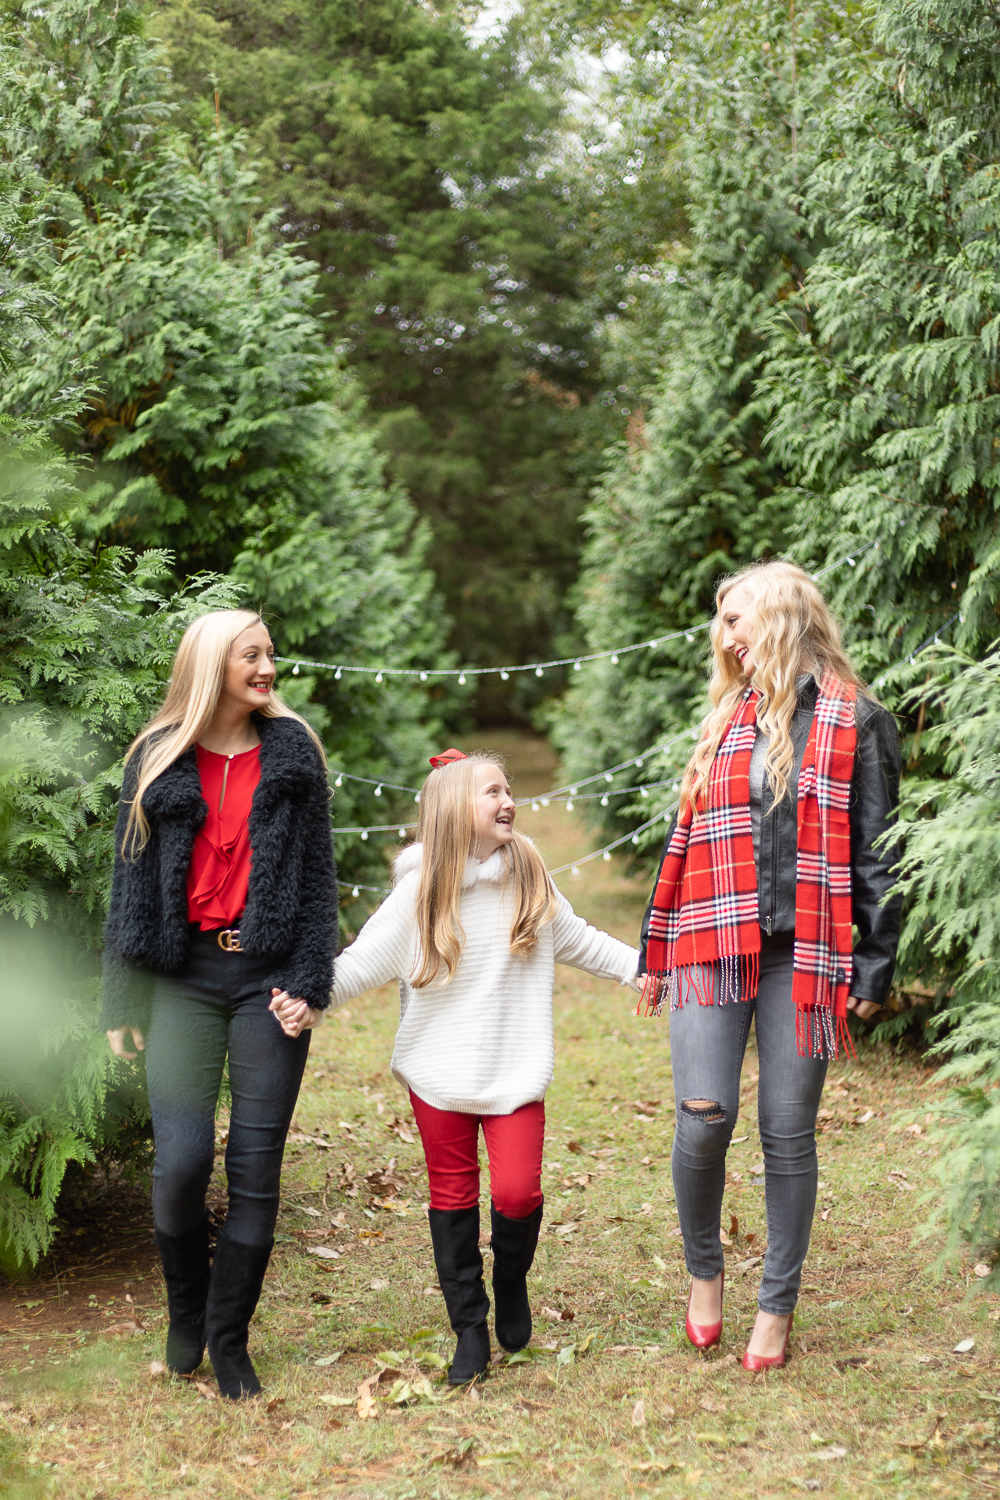 Christmas Mini Session | Sisters walking through Christmas trees | Jade Alexandrai Photography, Huntsville, Alabama Portrait Photographer